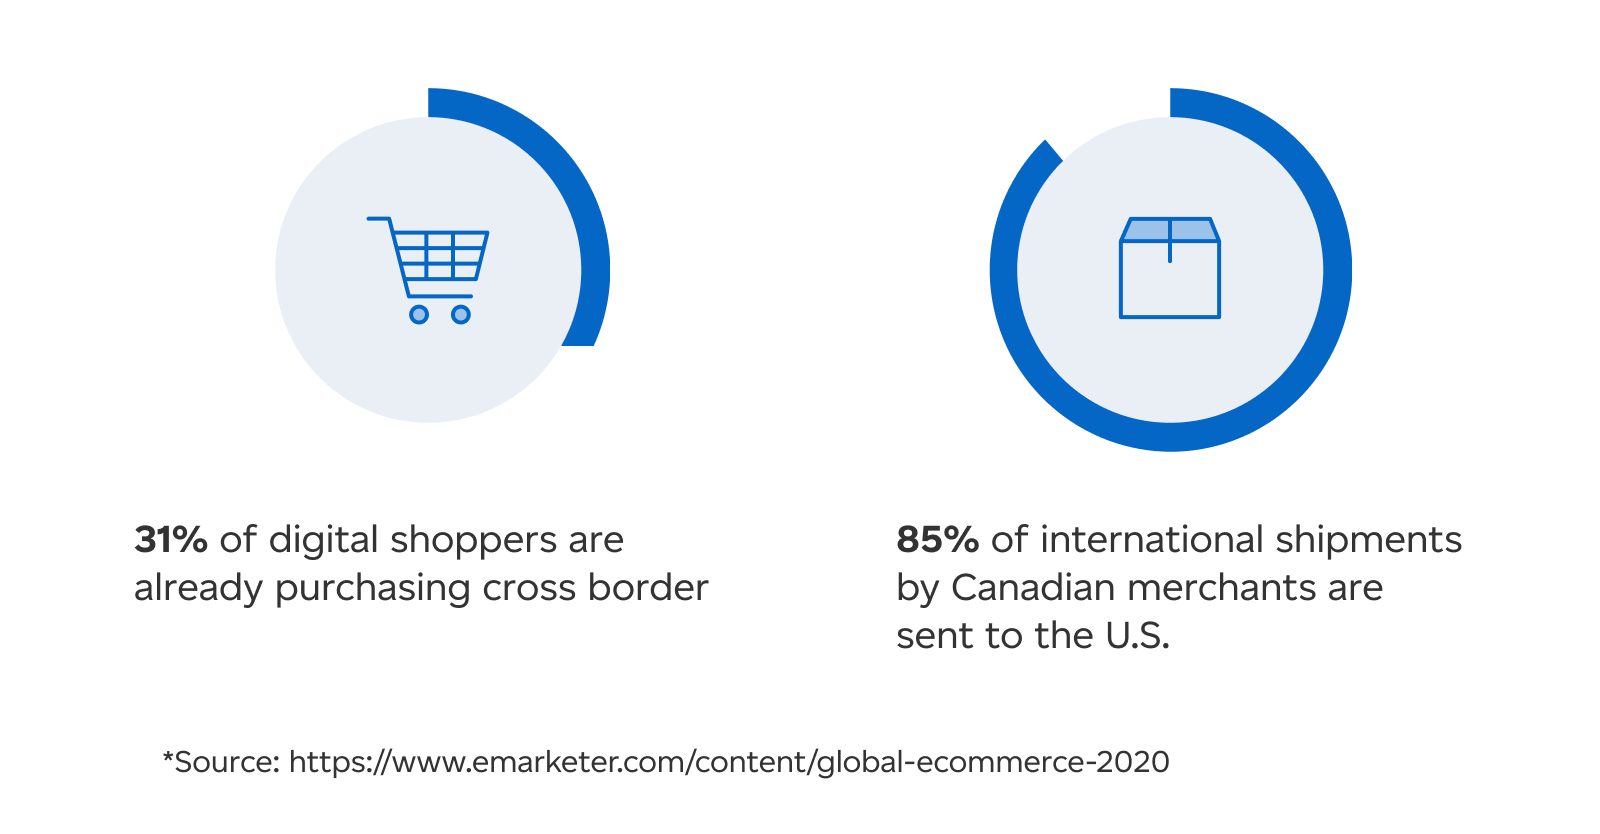 An infographic showing cross-border shopping behaviour.